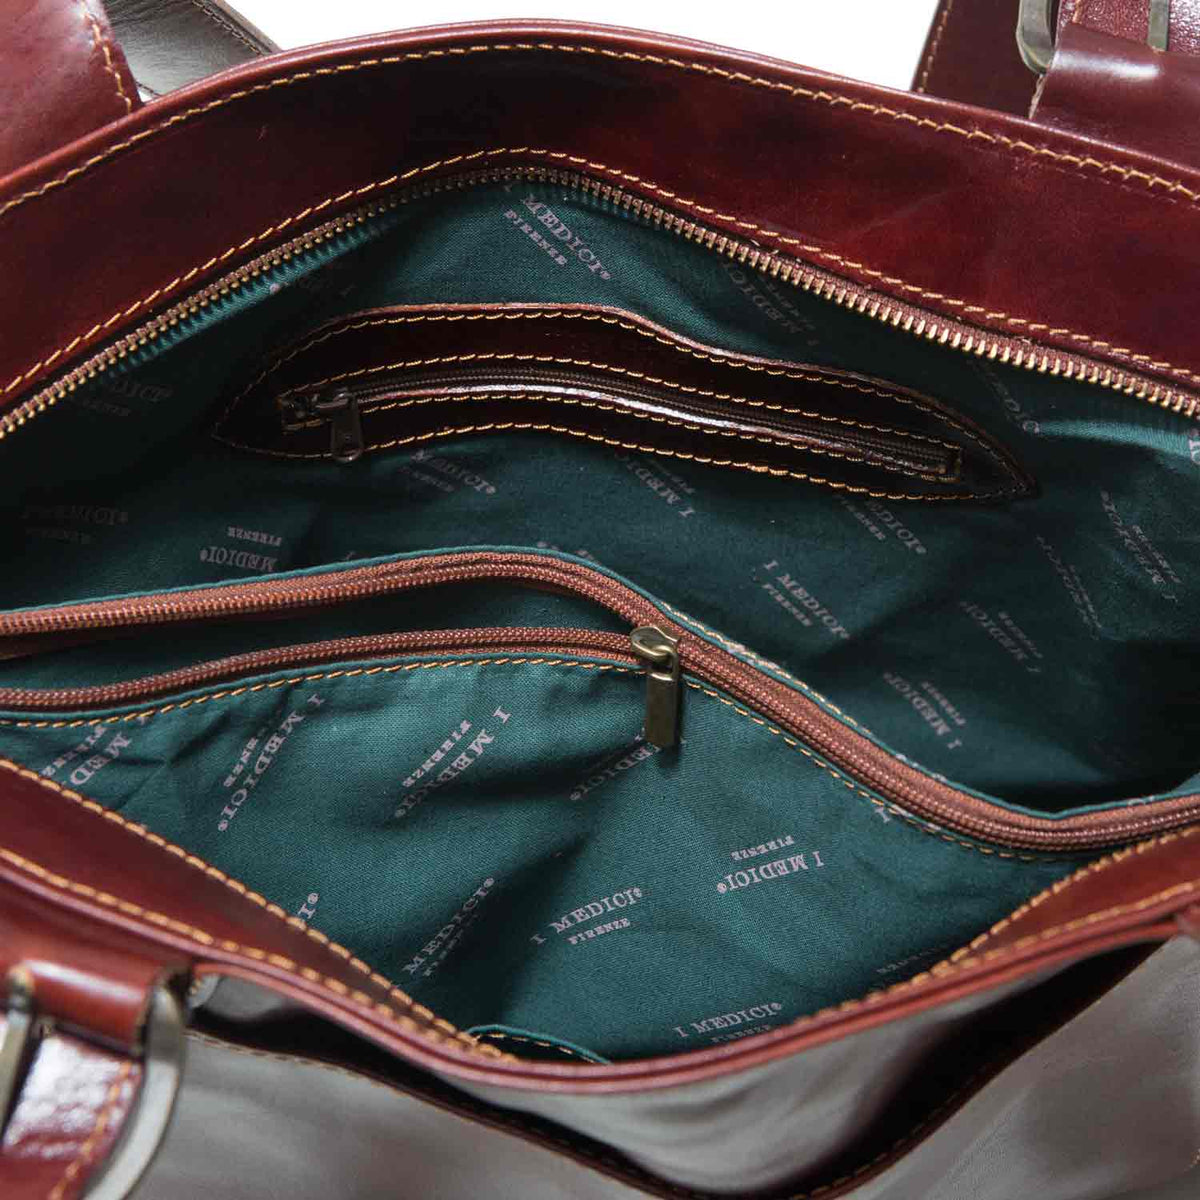 Pavia Shopping Tote, Italian Leather, Made in Italy - My Italian Decor